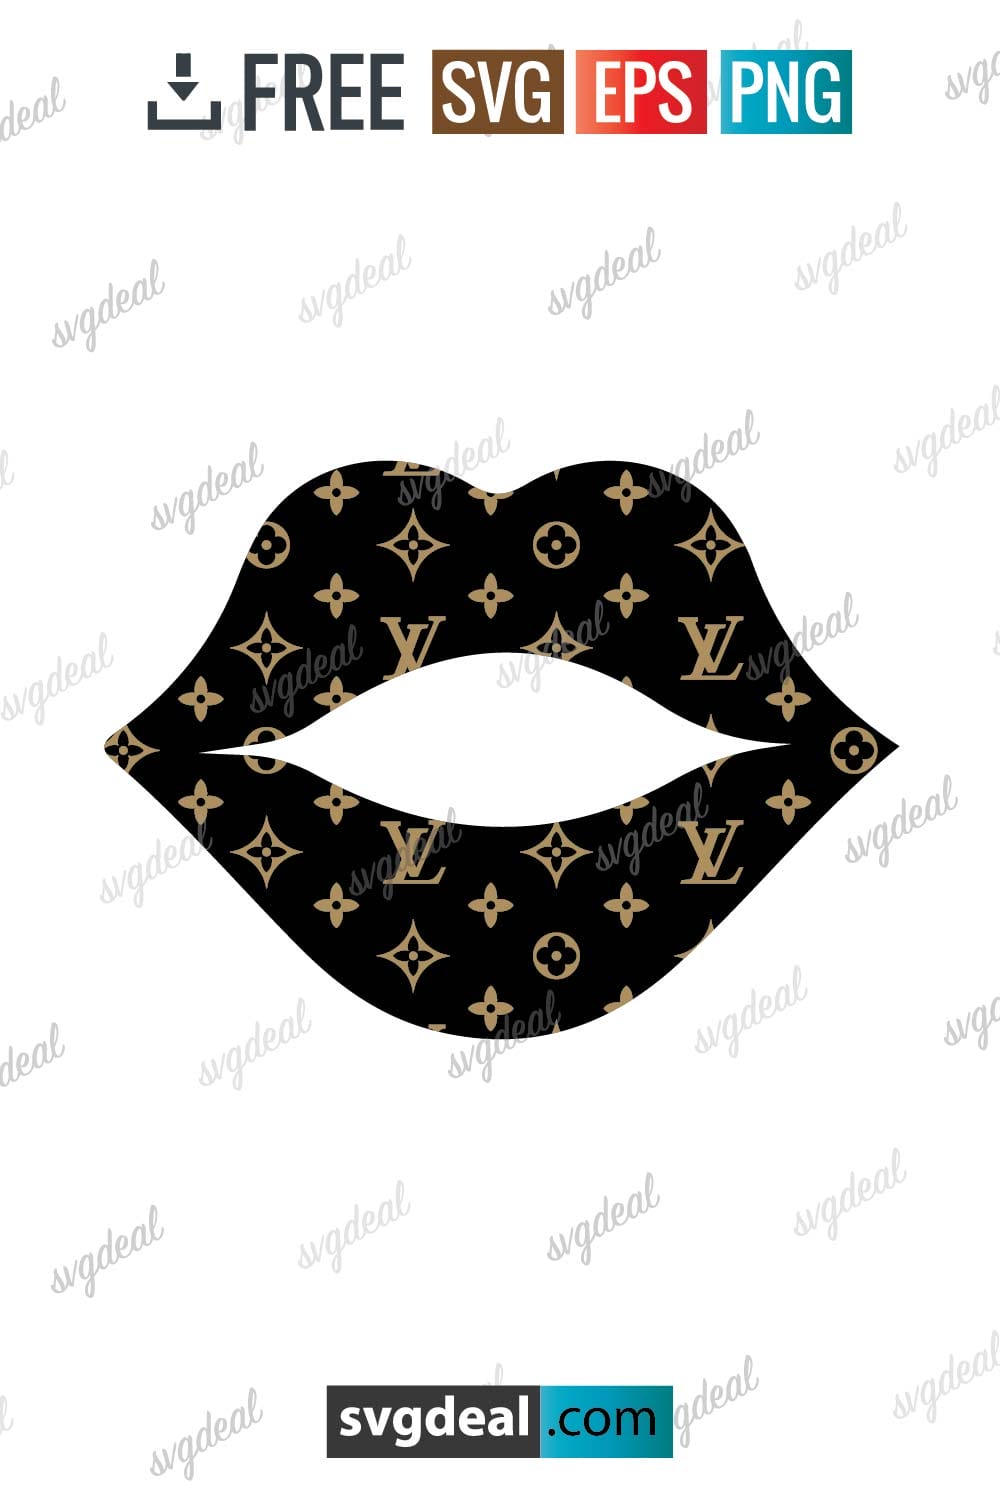 Louis Vuitton Lips SVG - Free SVG Files